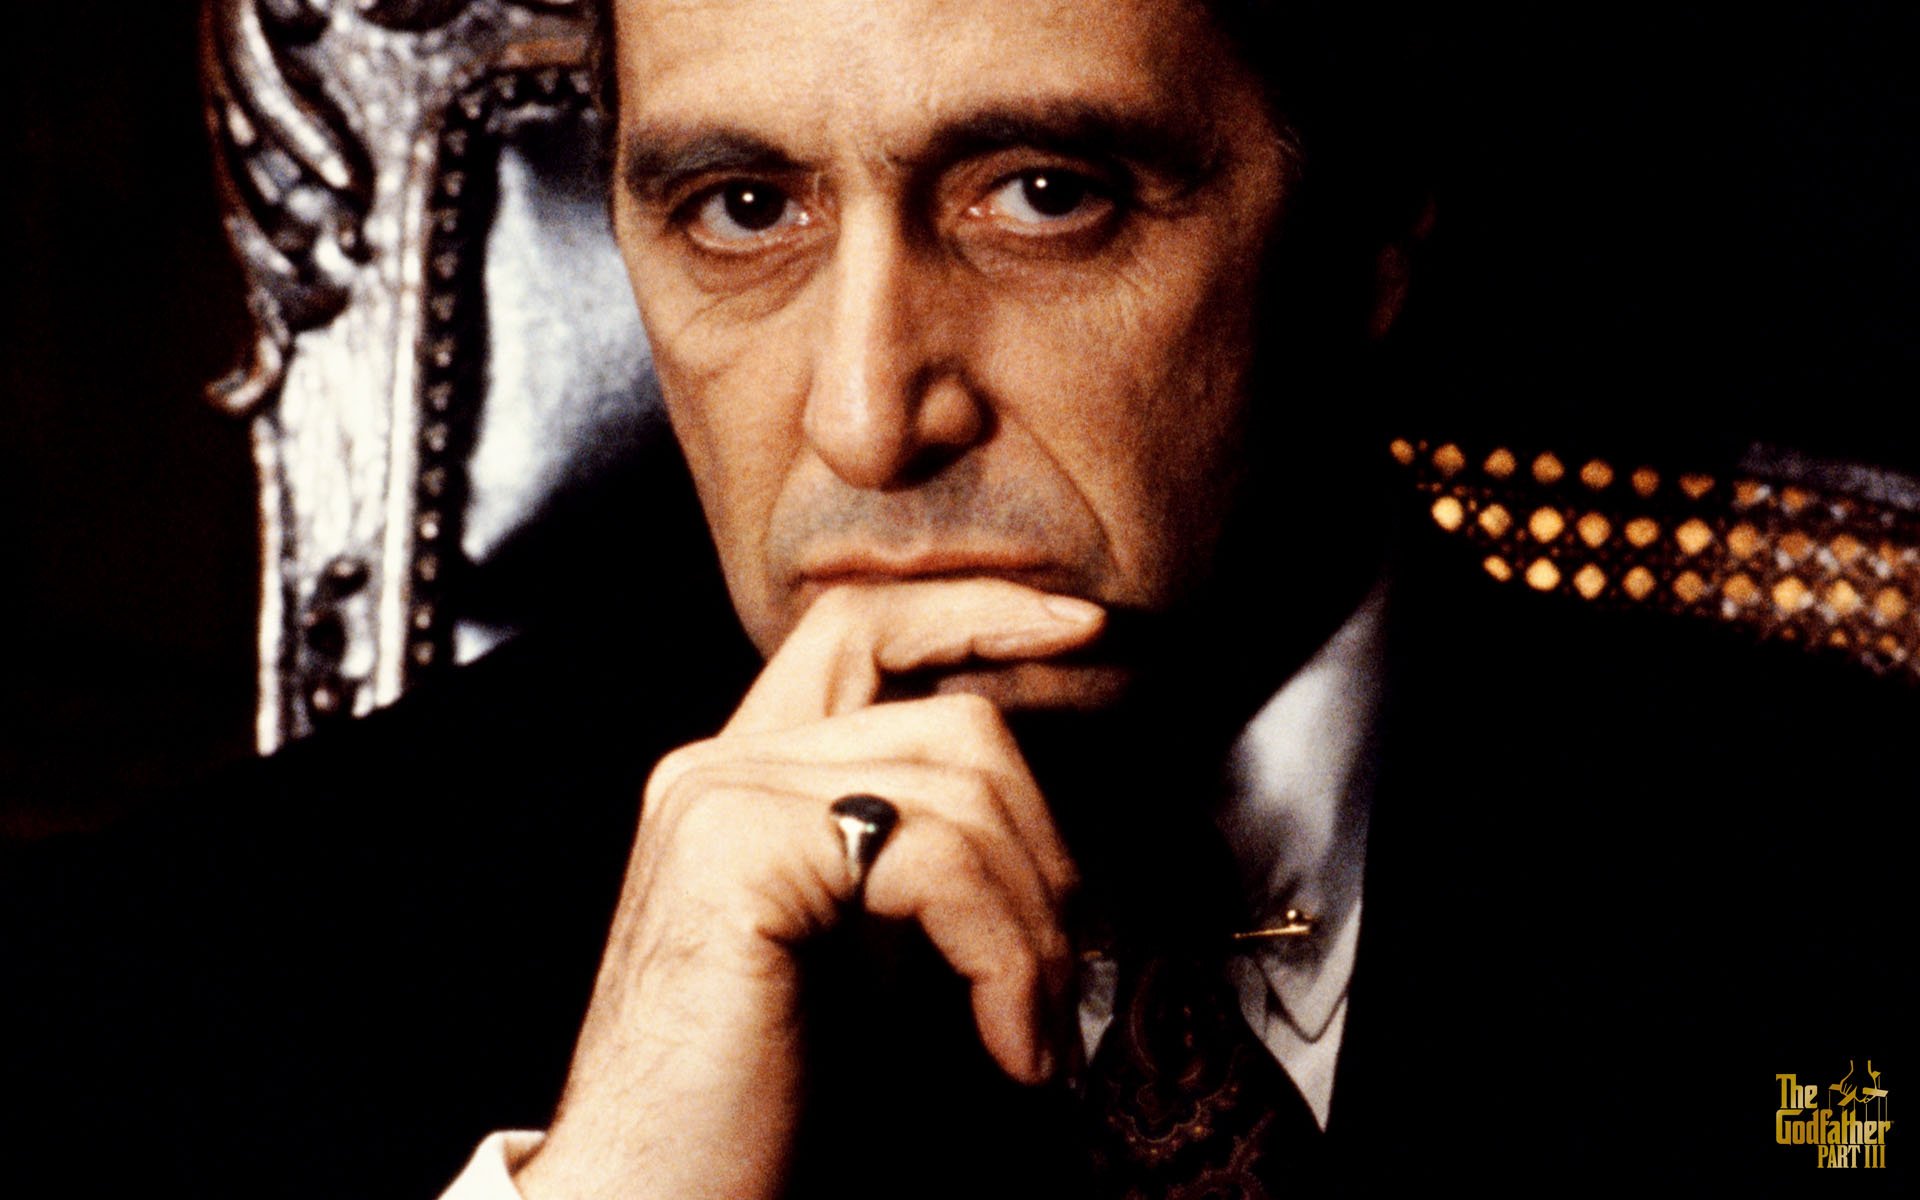 The Godfather Part Iii Mafia Classic Al Pacino Wallpaper